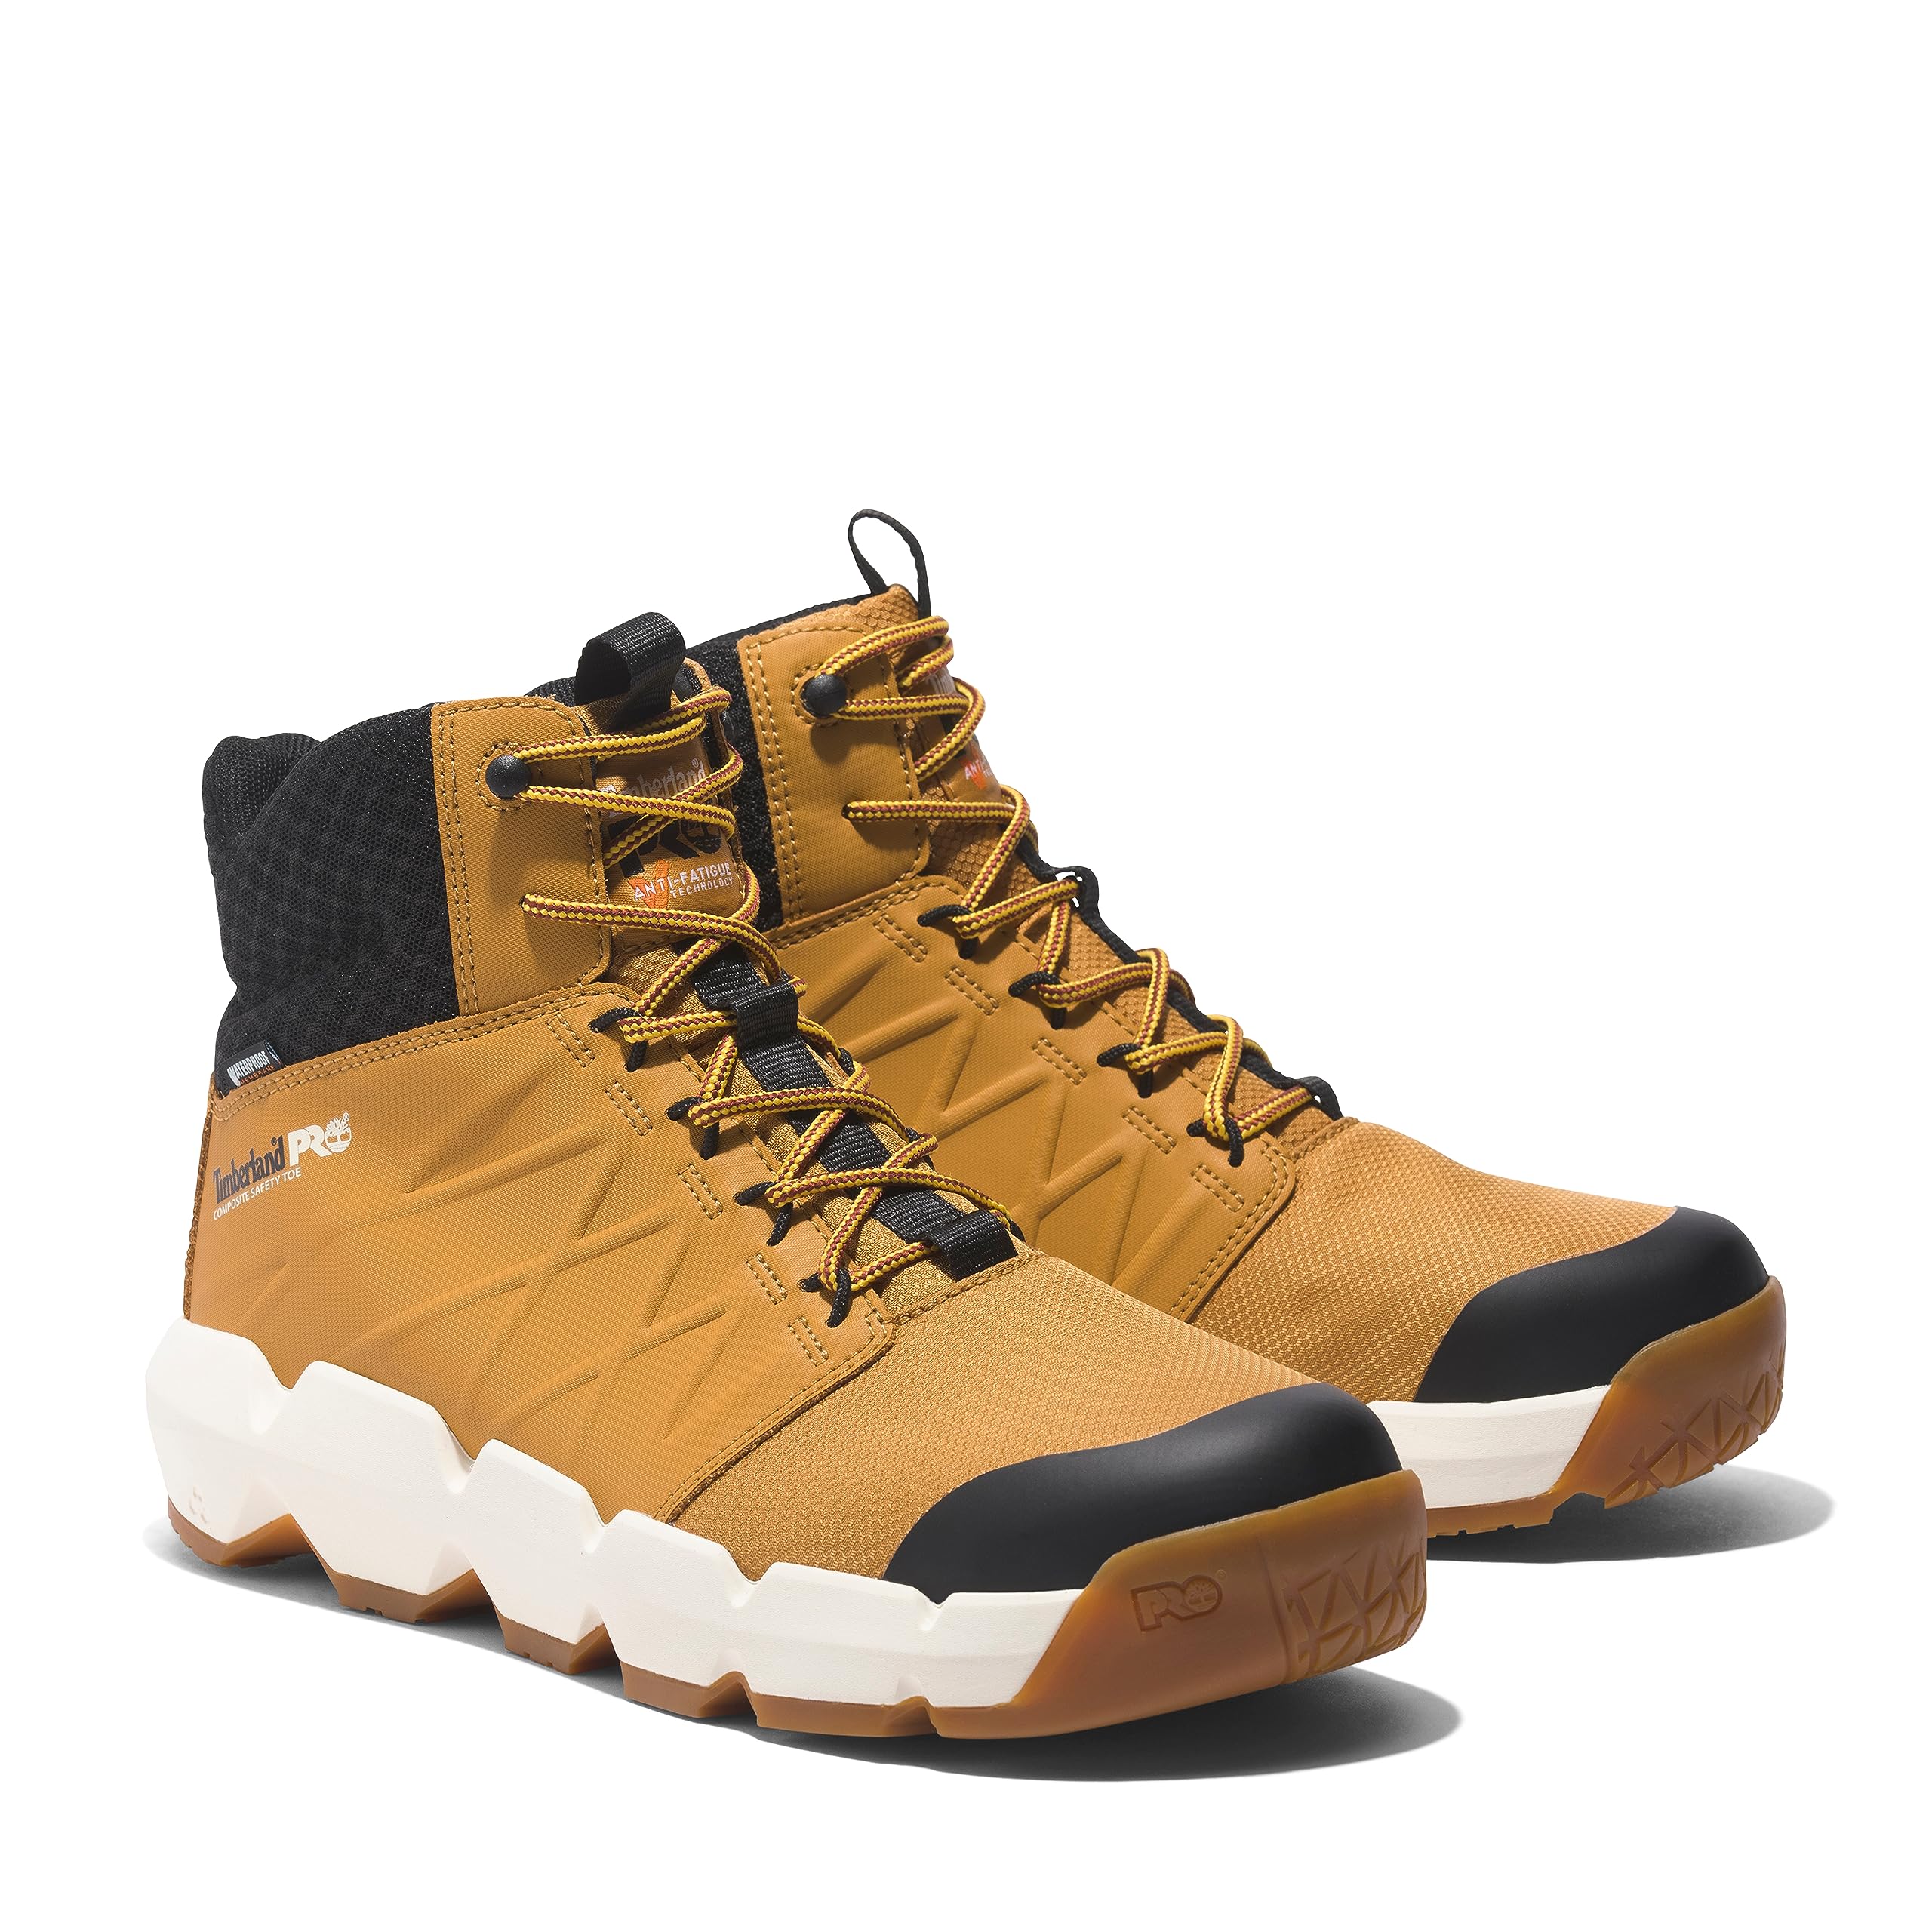 Timberland PRO Men's Morphix 6 Inch Composite Safety Toe Waterproof Industrial Casual Sneaker Boot